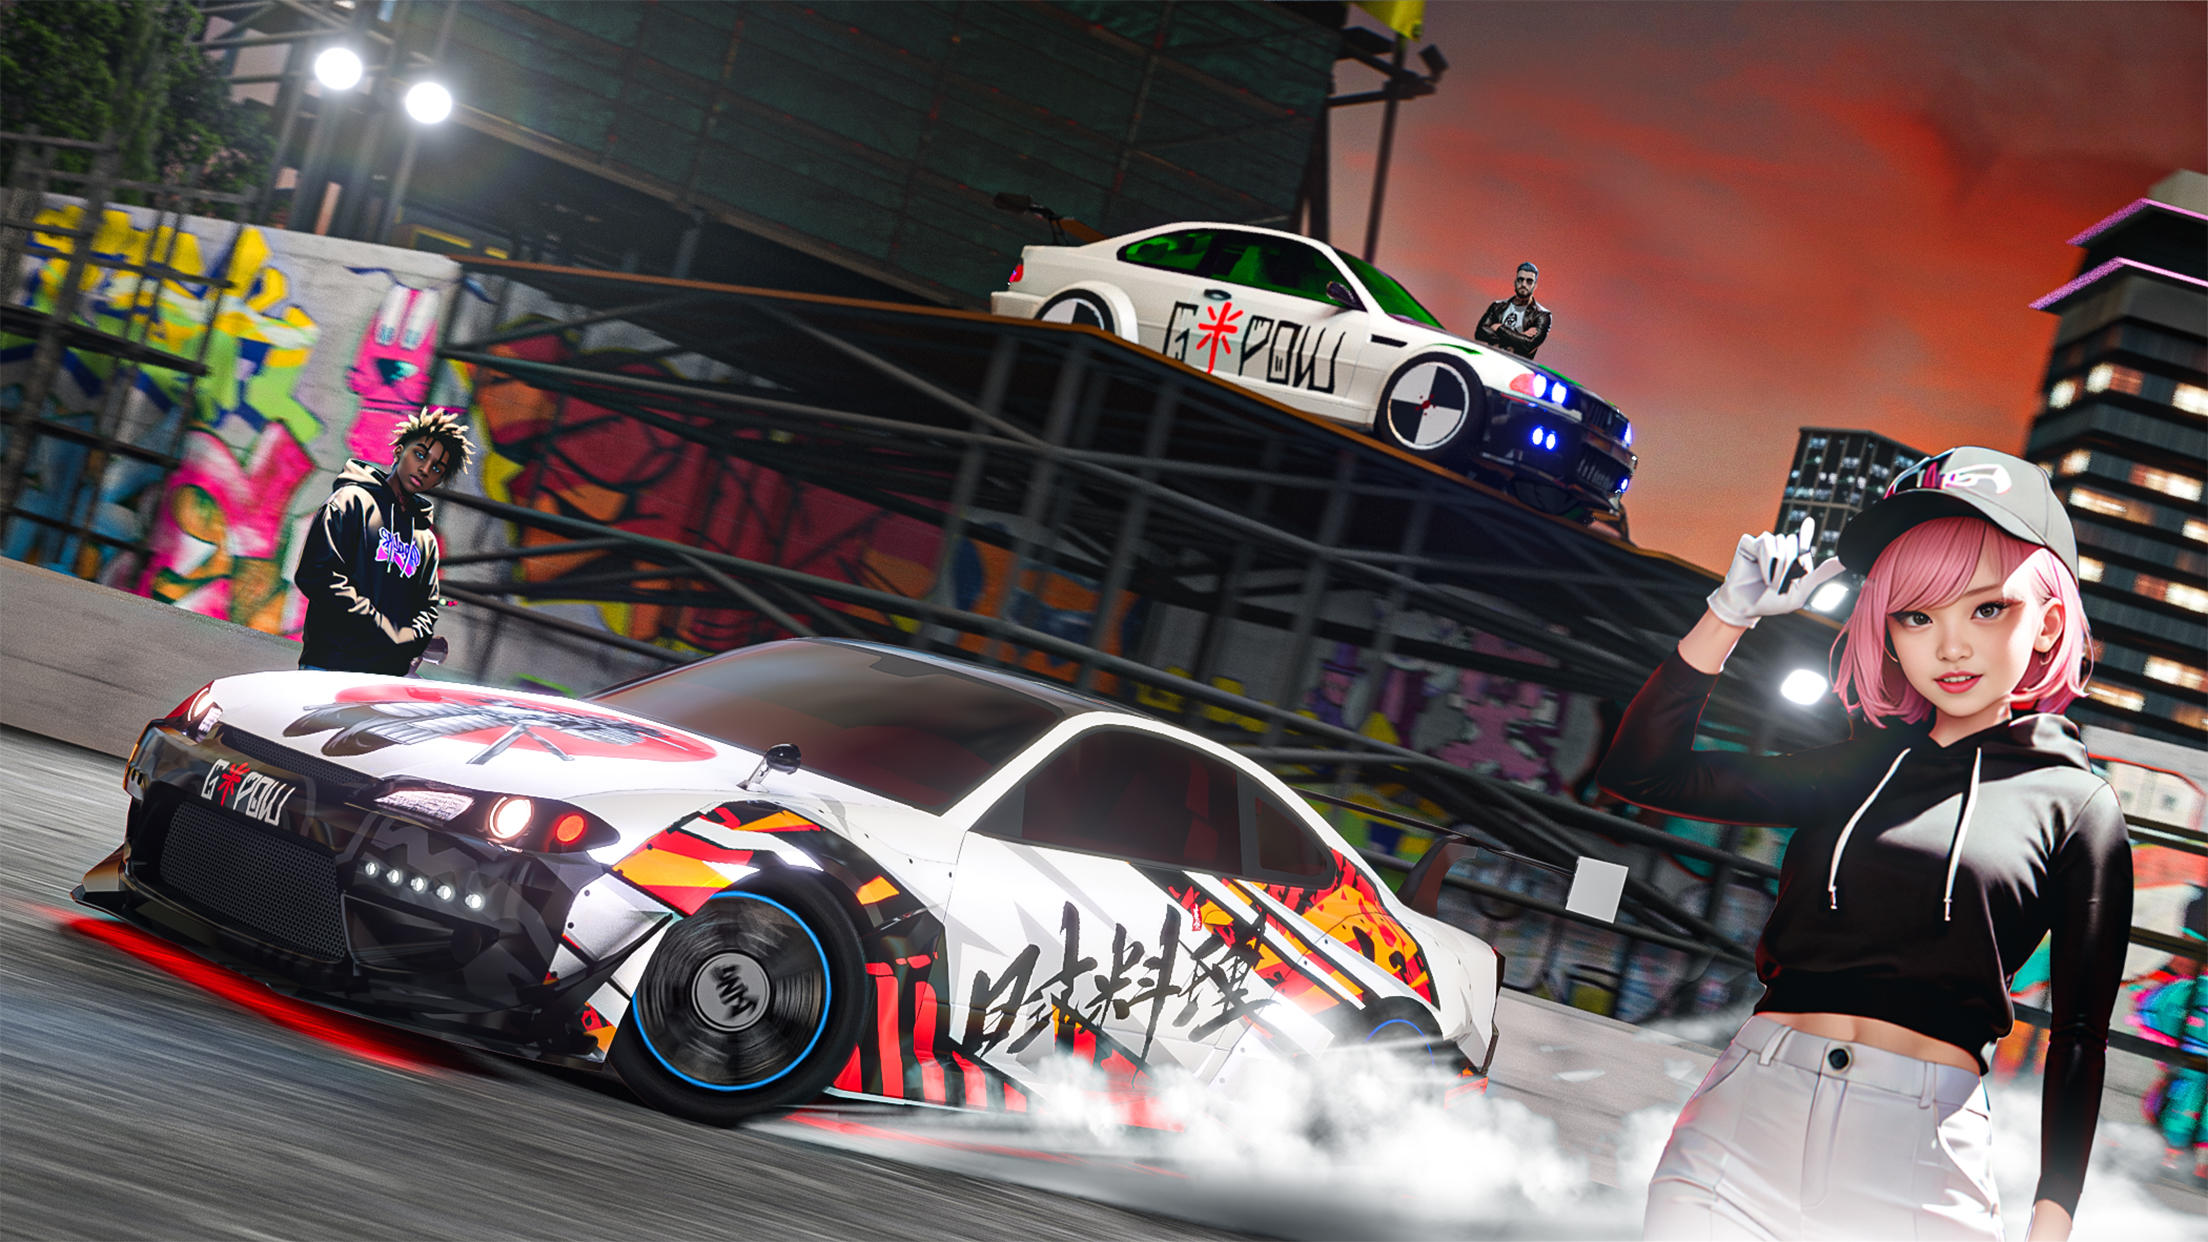 Turbo Tornado: Open World Race screenshot game